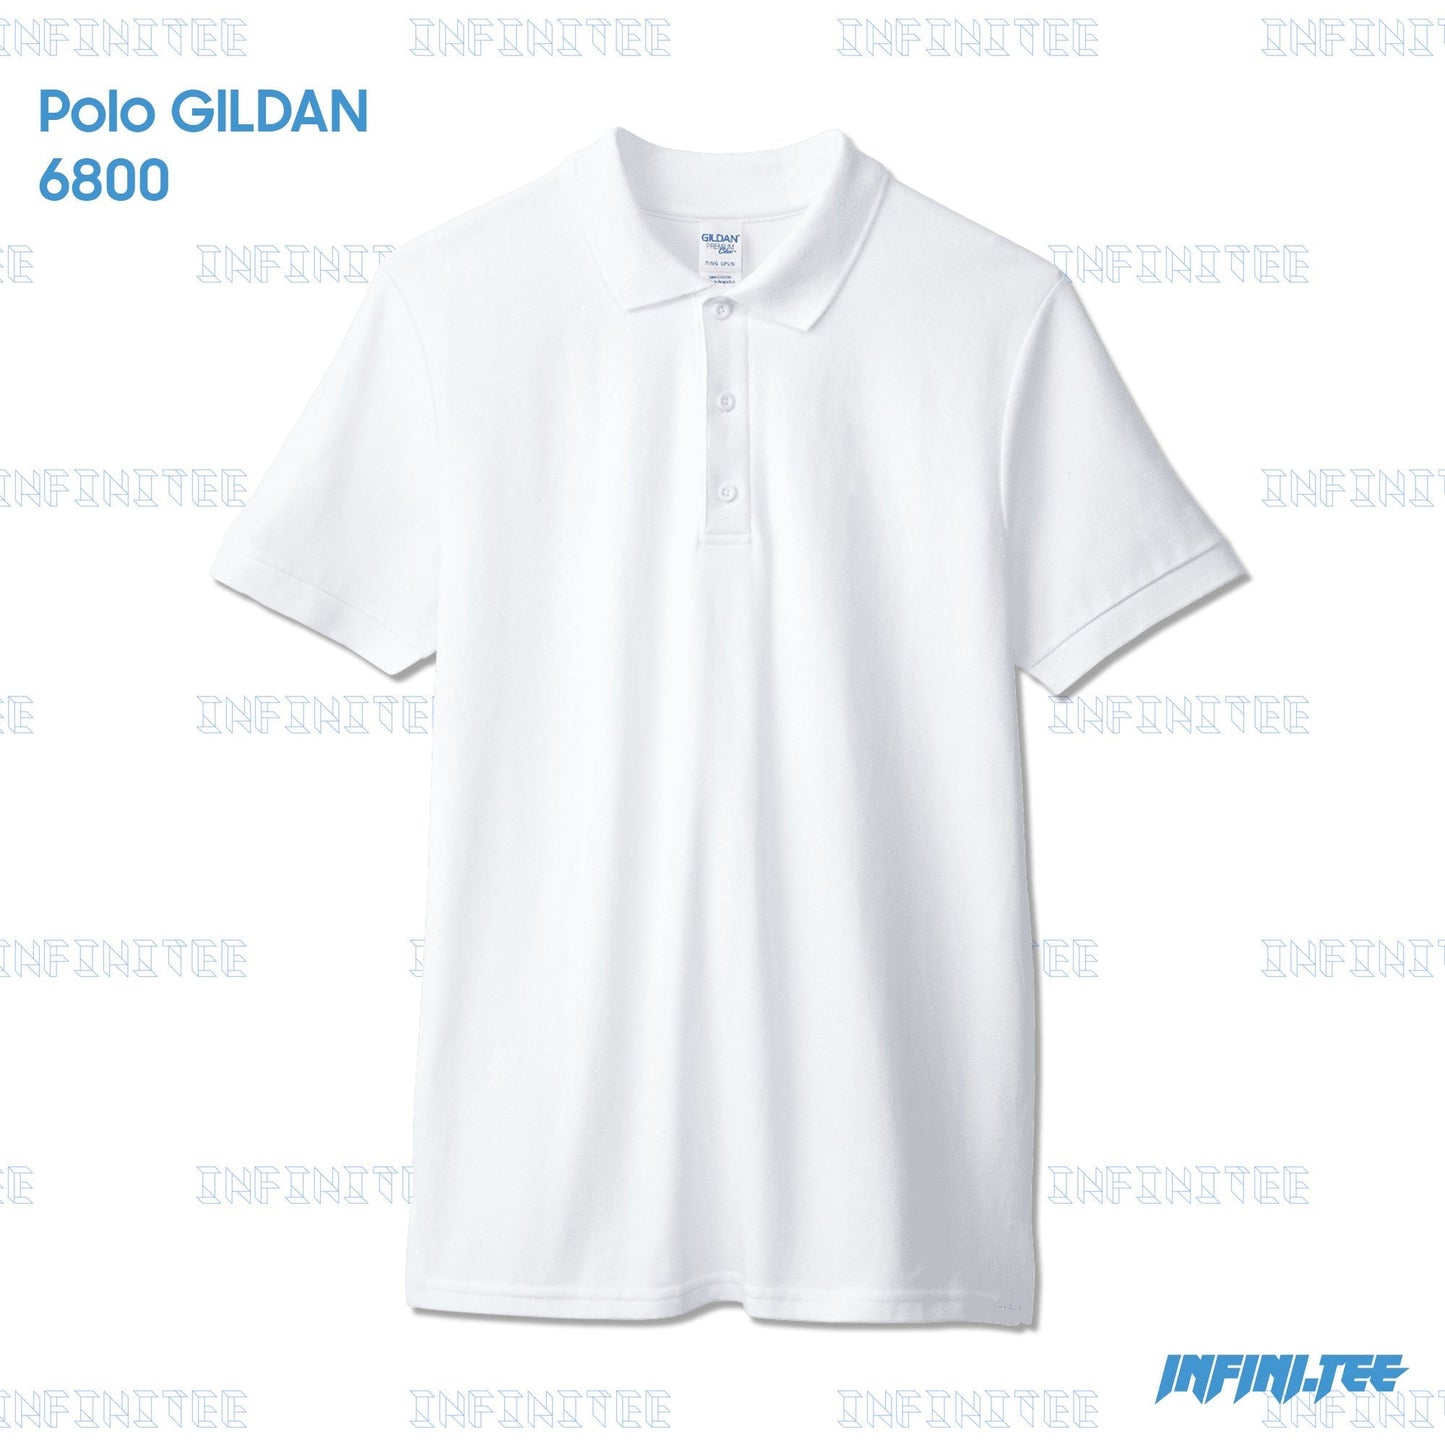 Design Polo Premium